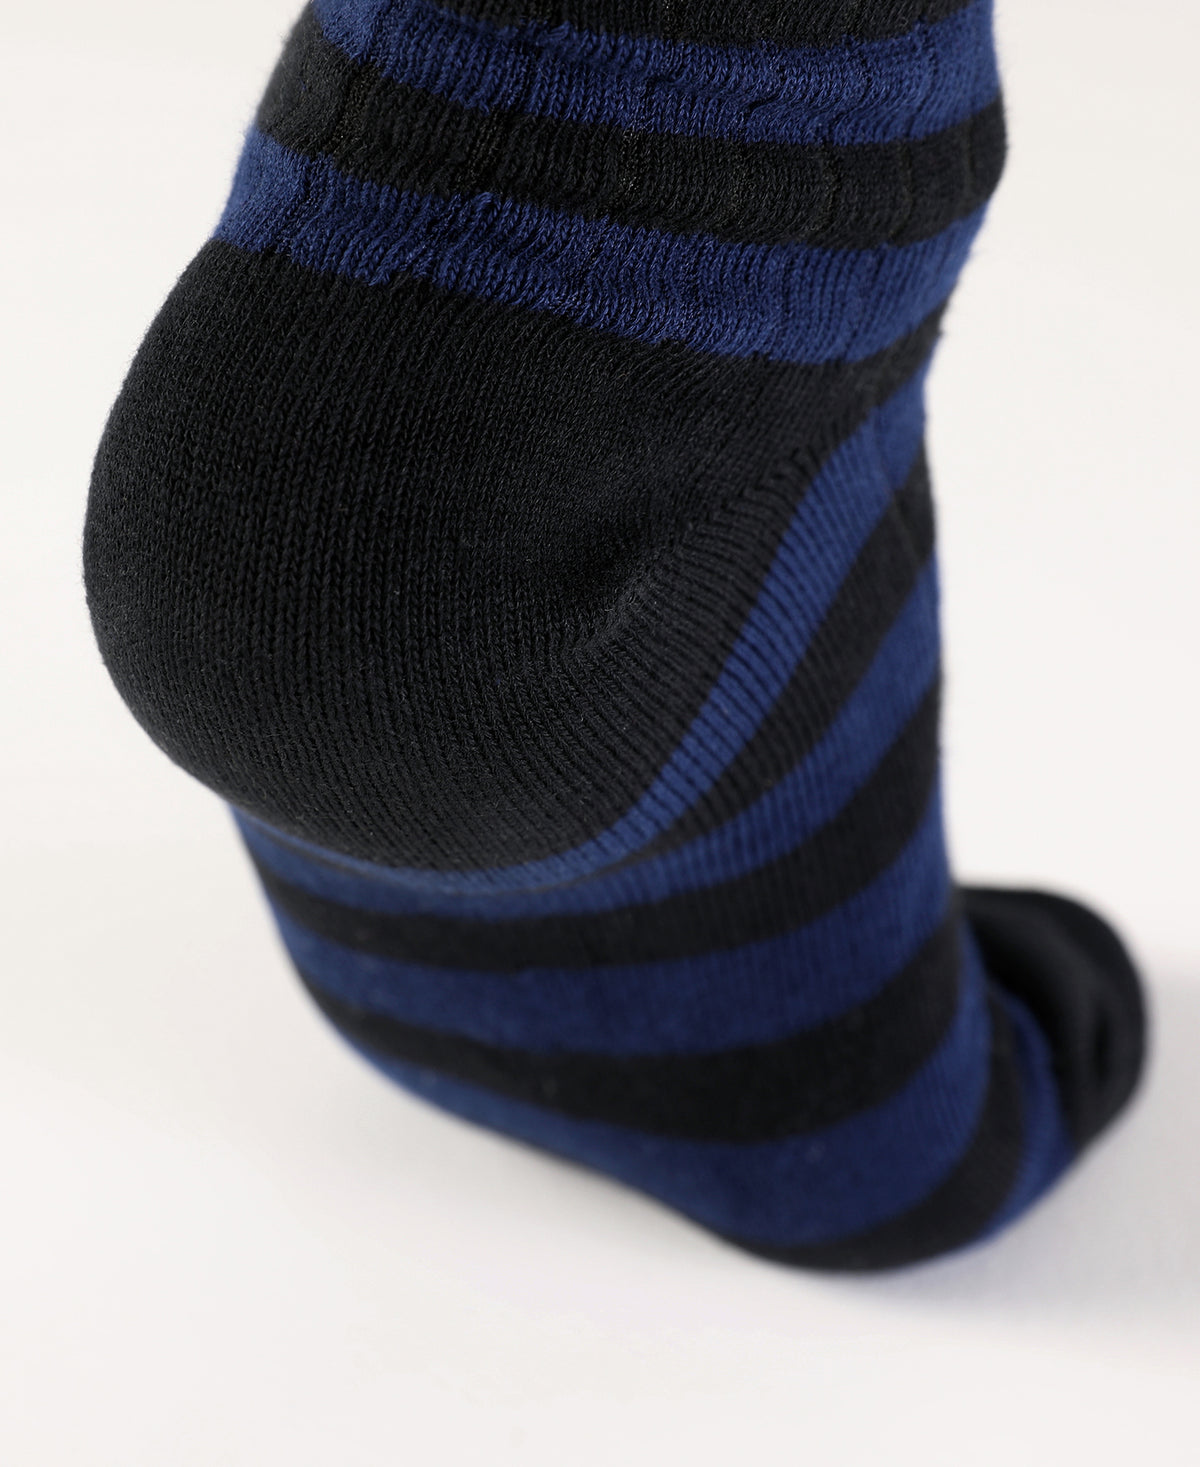 Retro Striped Cotton Socks - Black/Blue